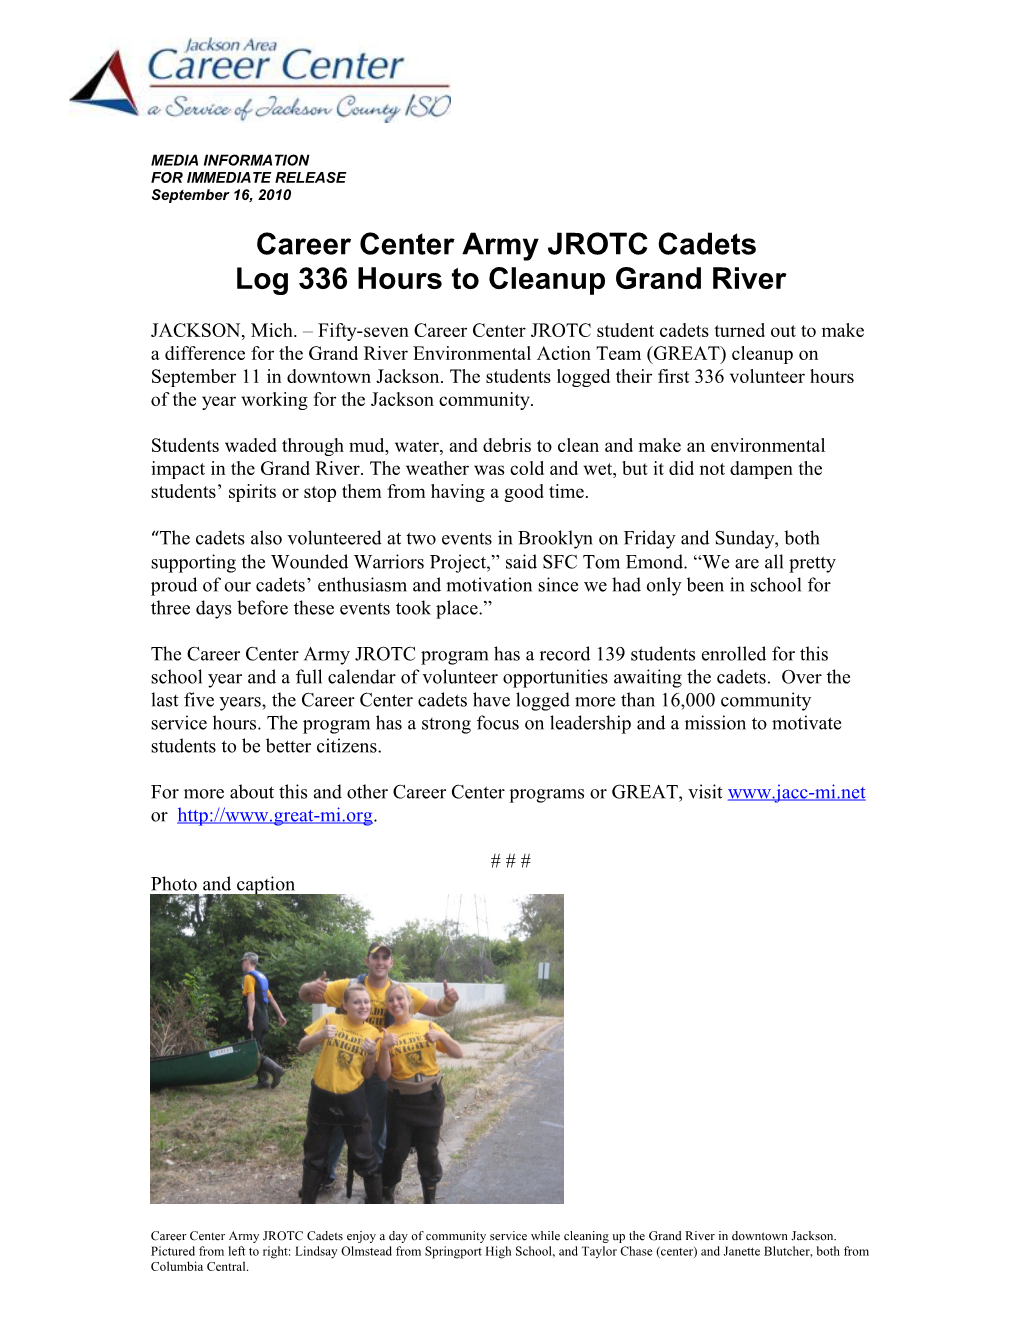 Career Center Army JROTC Cadets